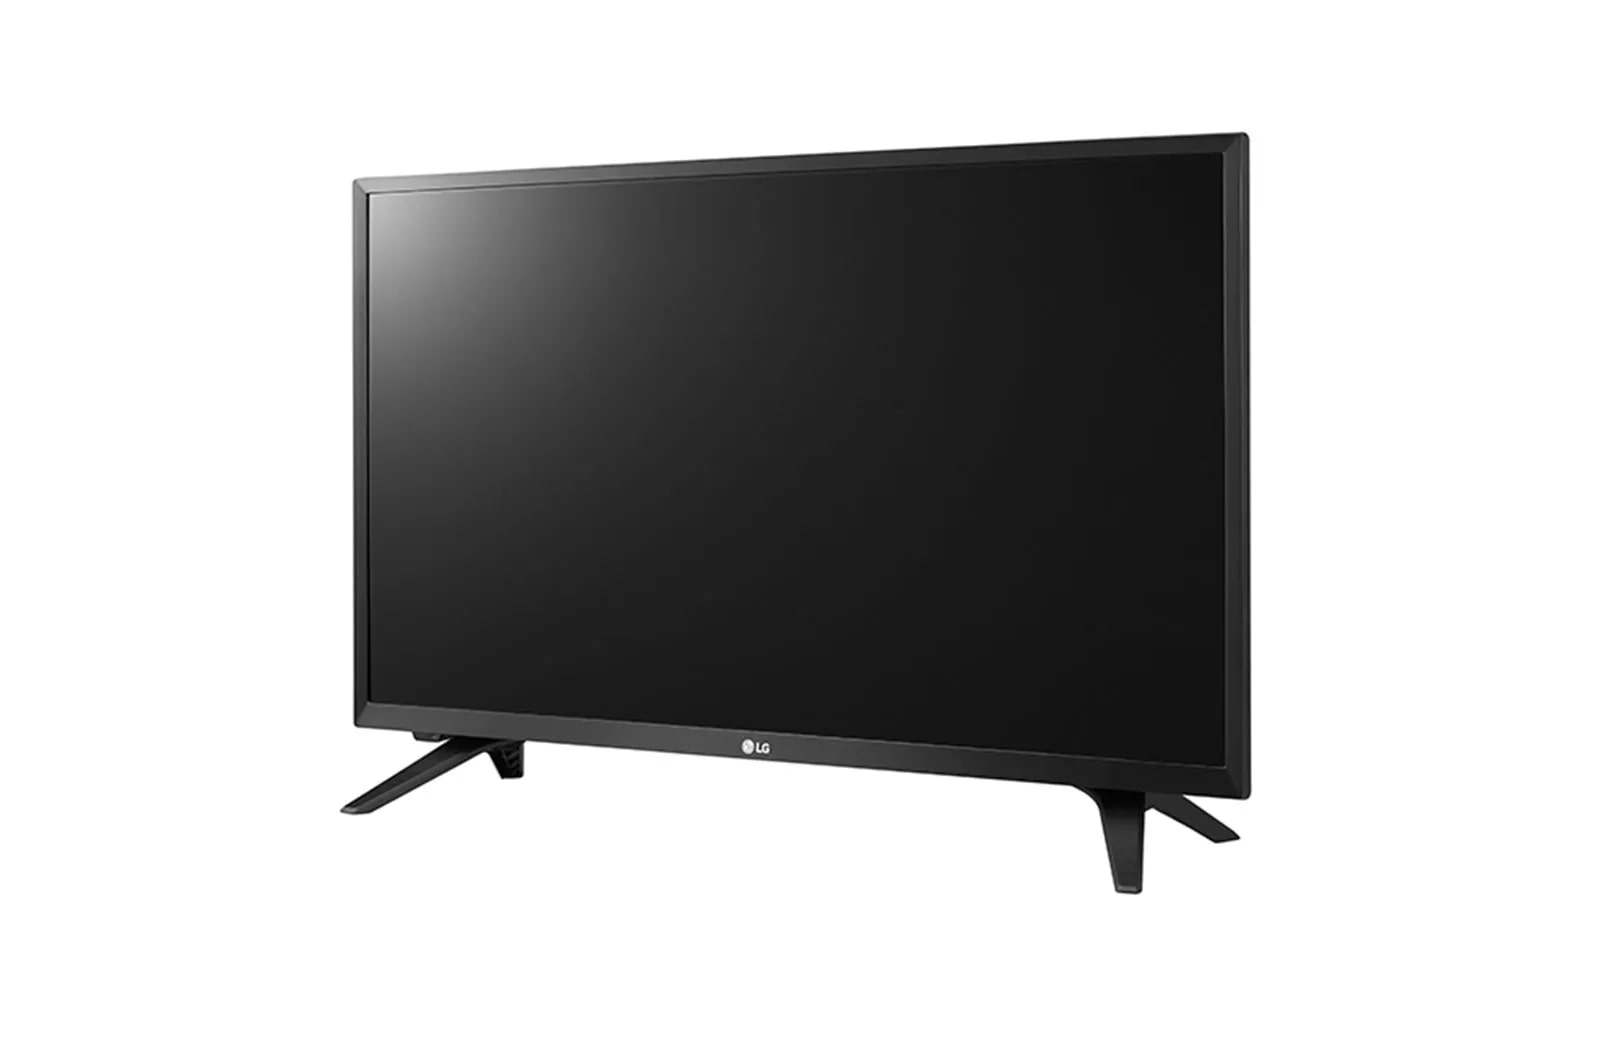 LG 28 Class LED HD TV 28LM400B-PU - Best Buy